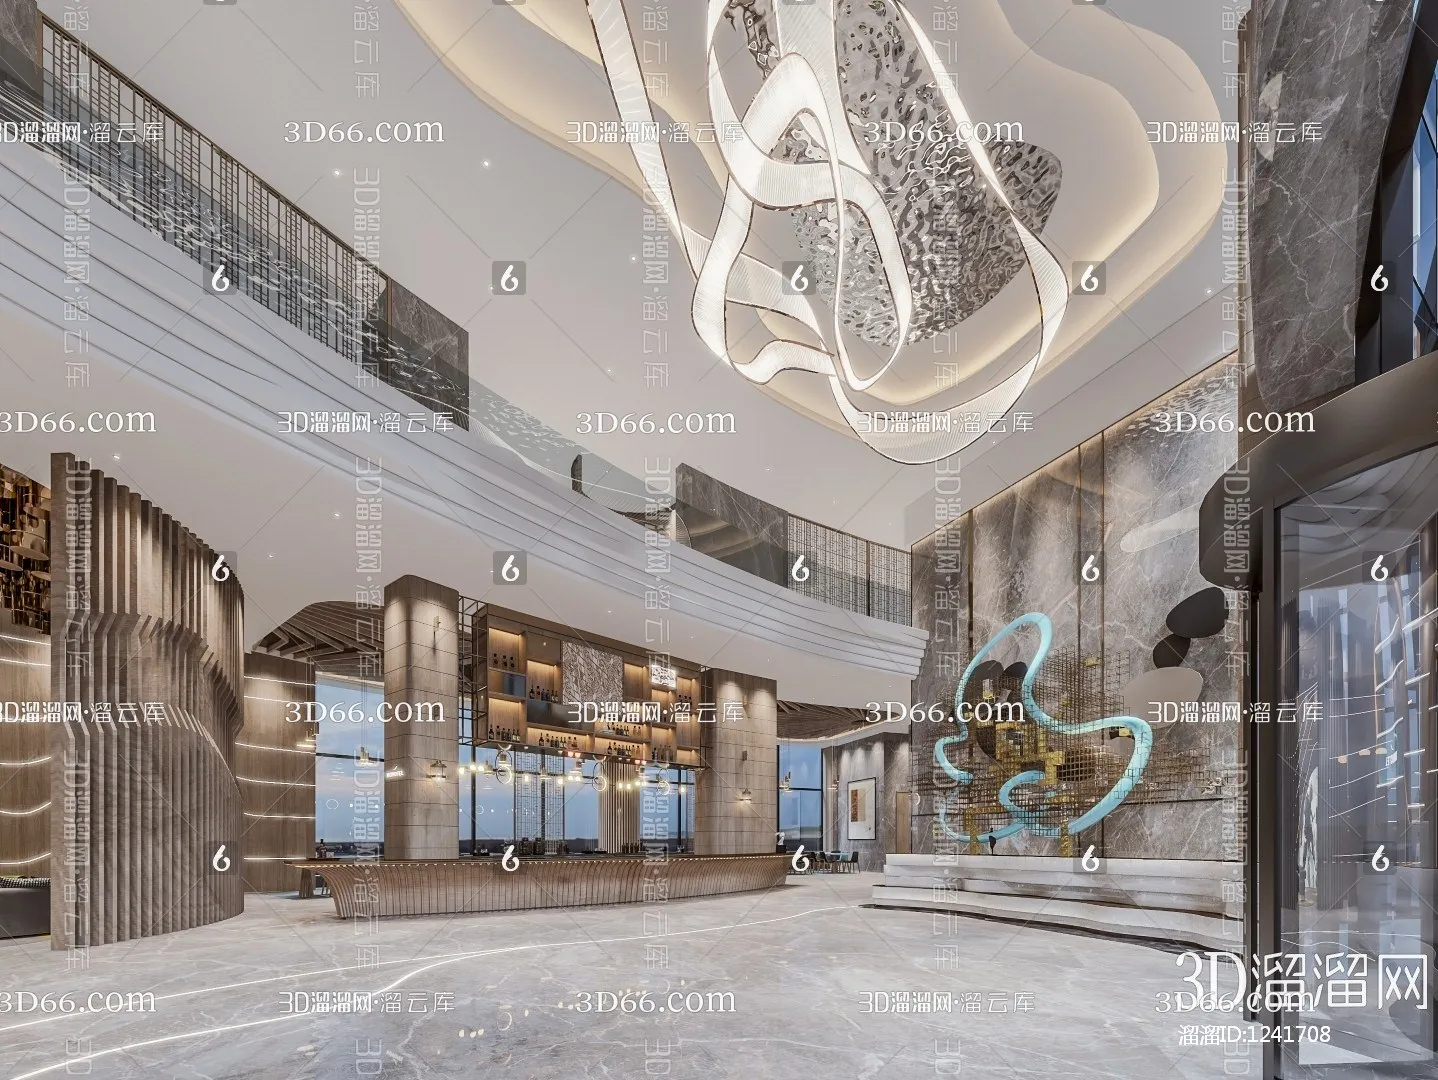 Hotel Lobby 3D Scenes – 0504